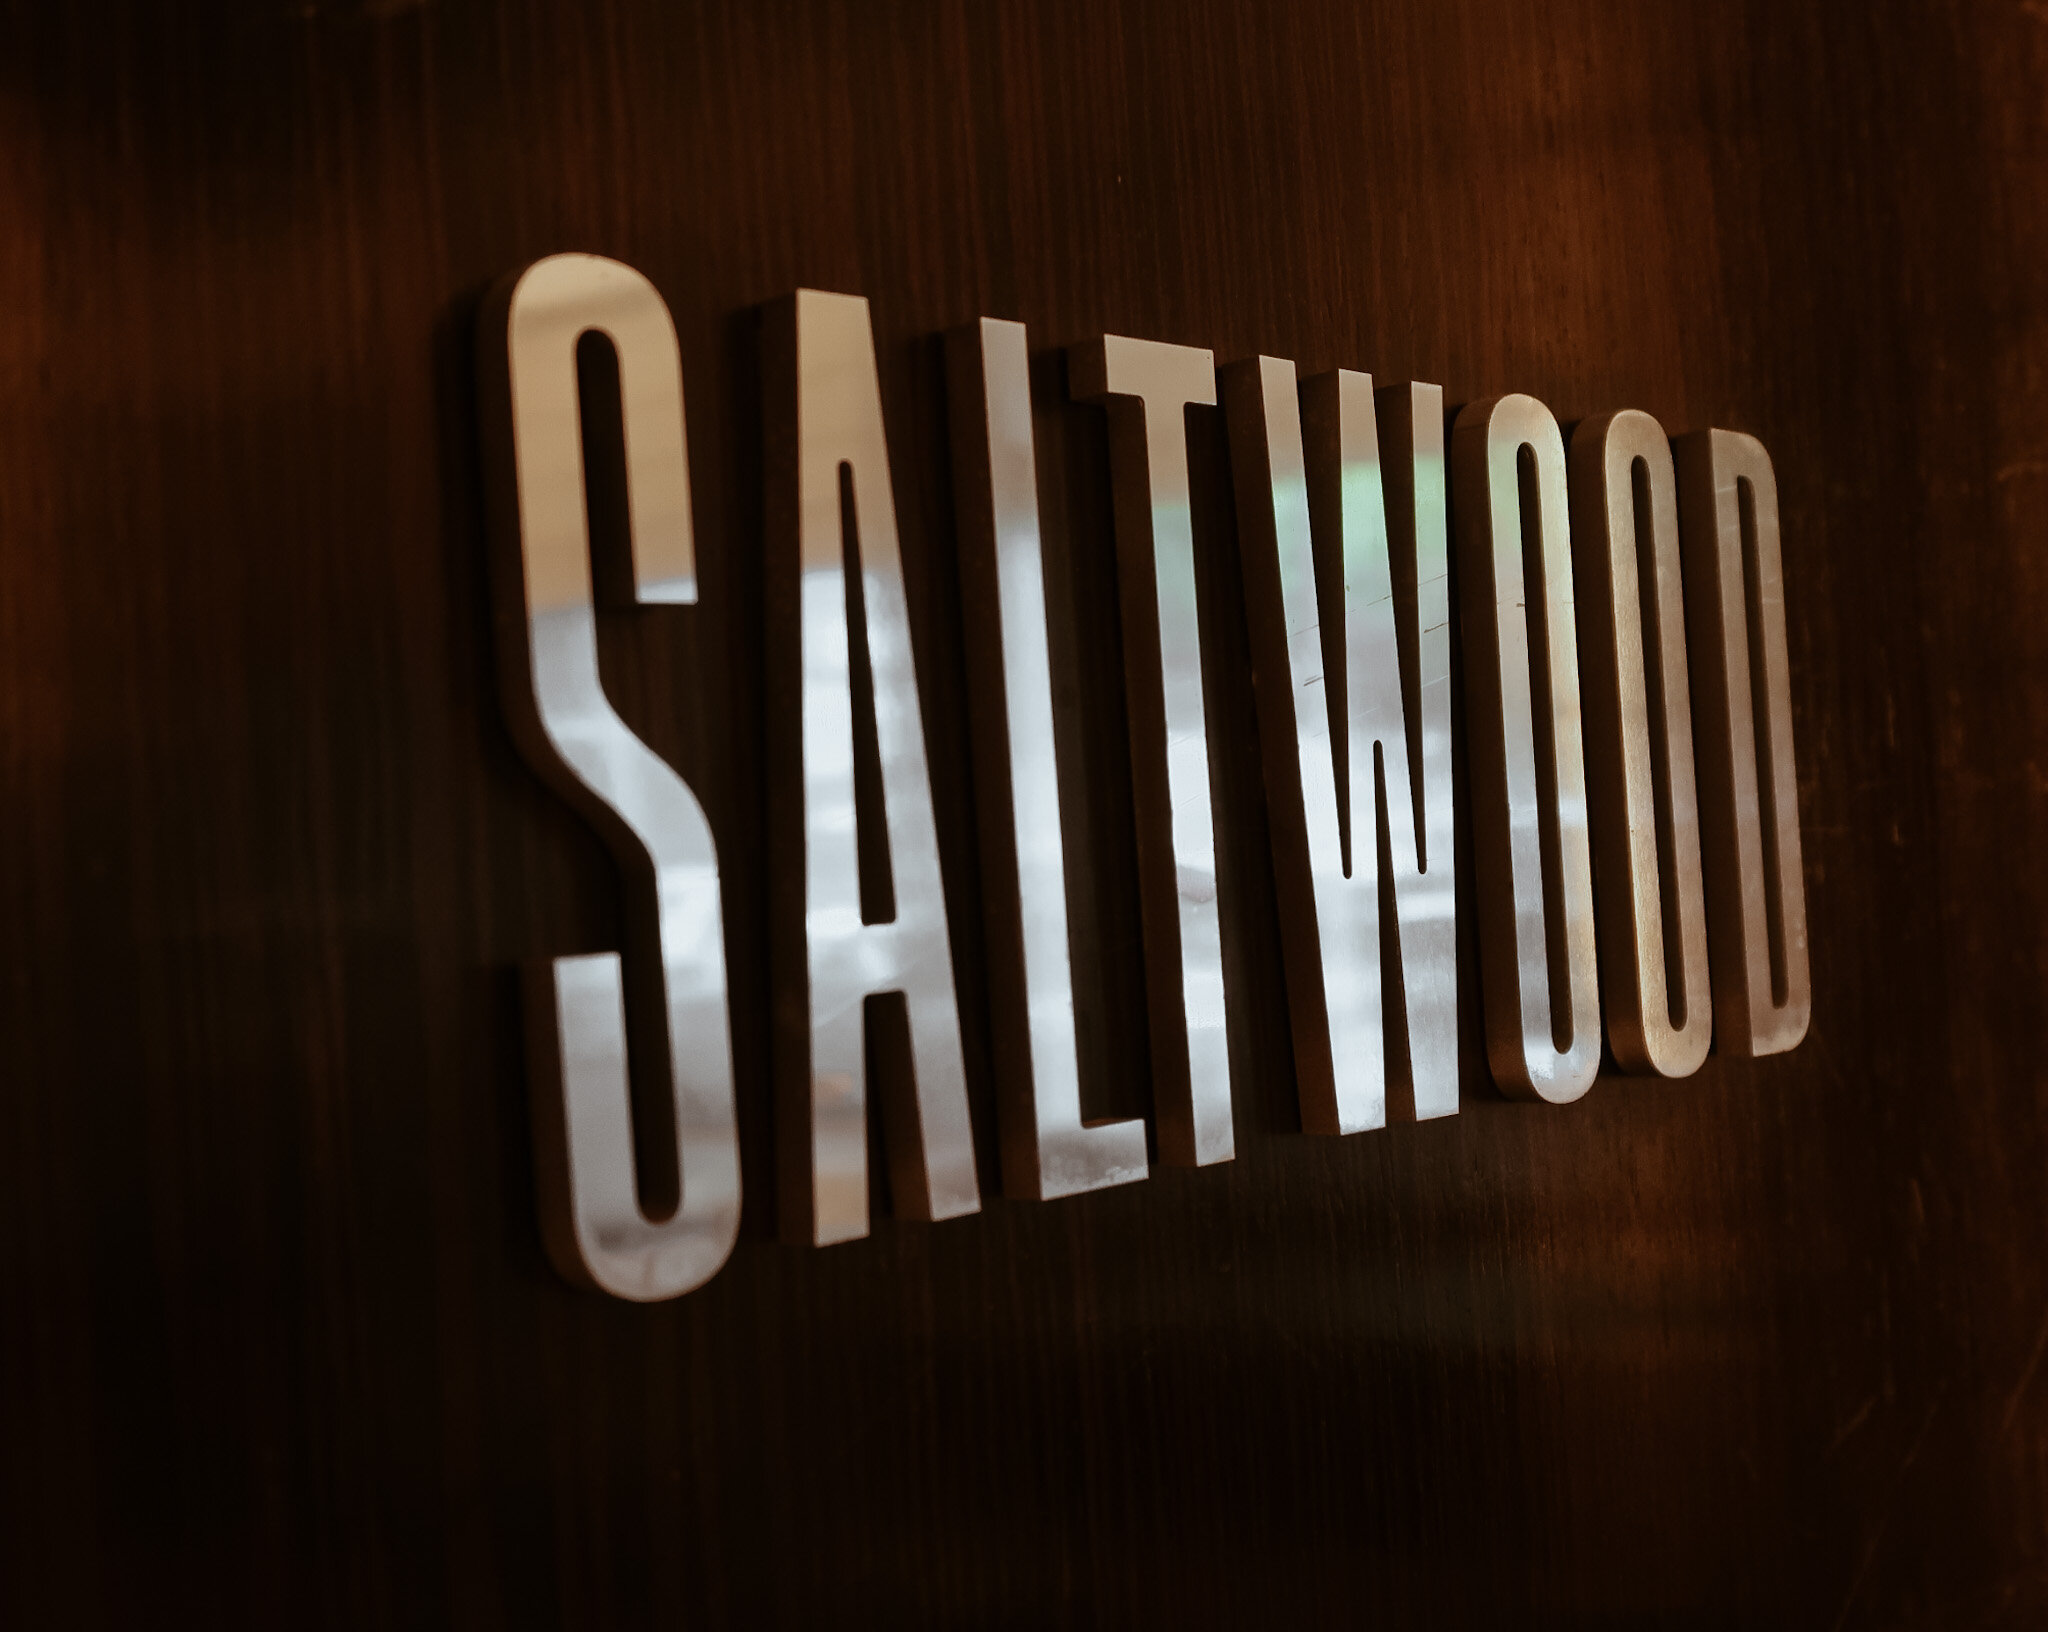 Saltwood Charcuterie & Bar